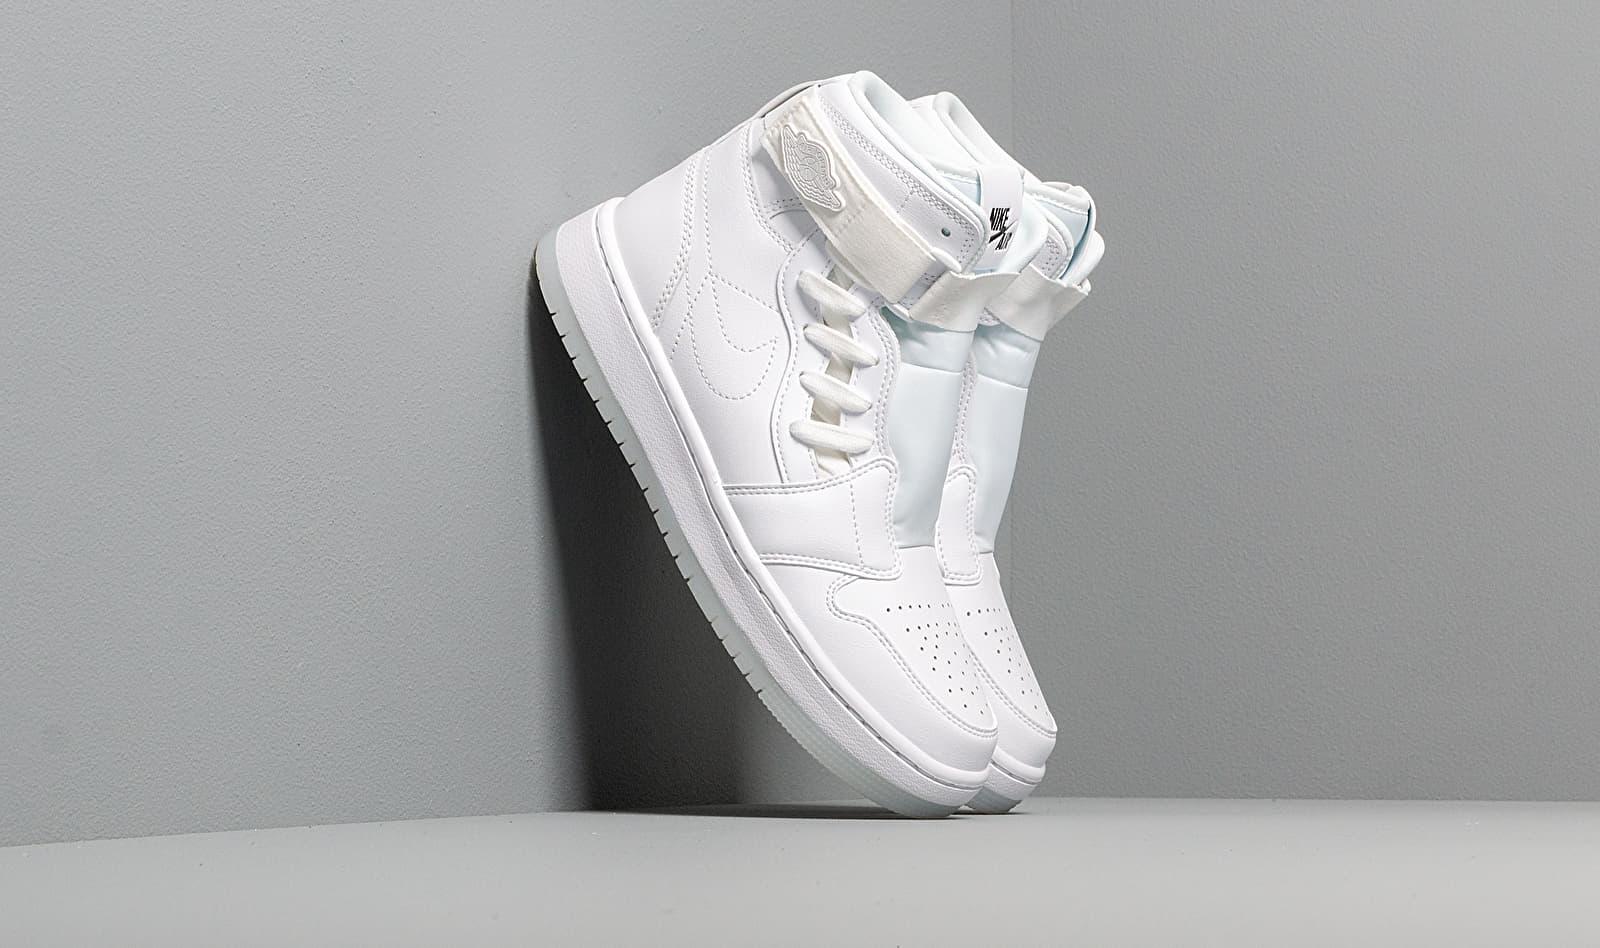 Nike Leather Air Jordan 1 Nova Xx Shoe in White/Black/White (White) - Lyst